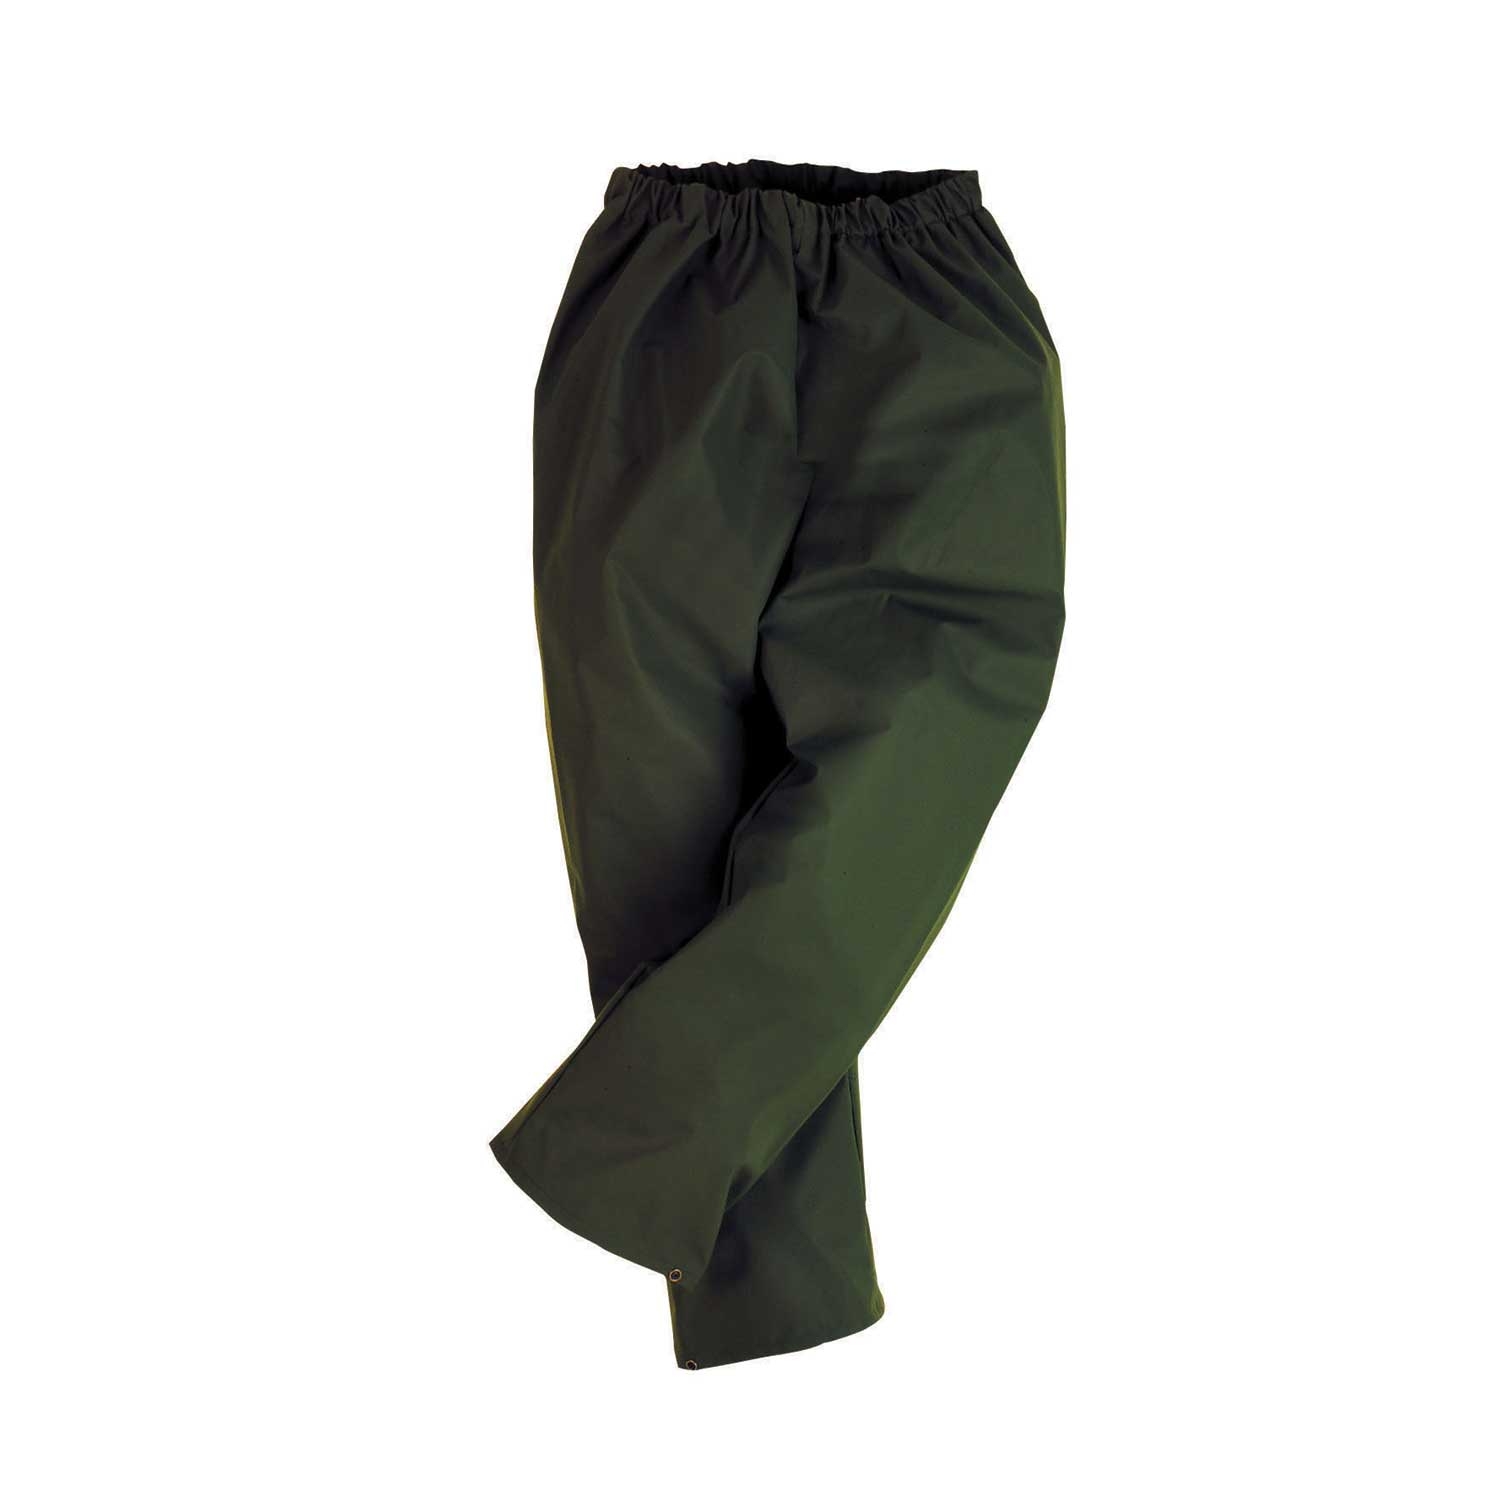 Sioen Flexothane Over Trousers - Waterproof Fishing Trousers